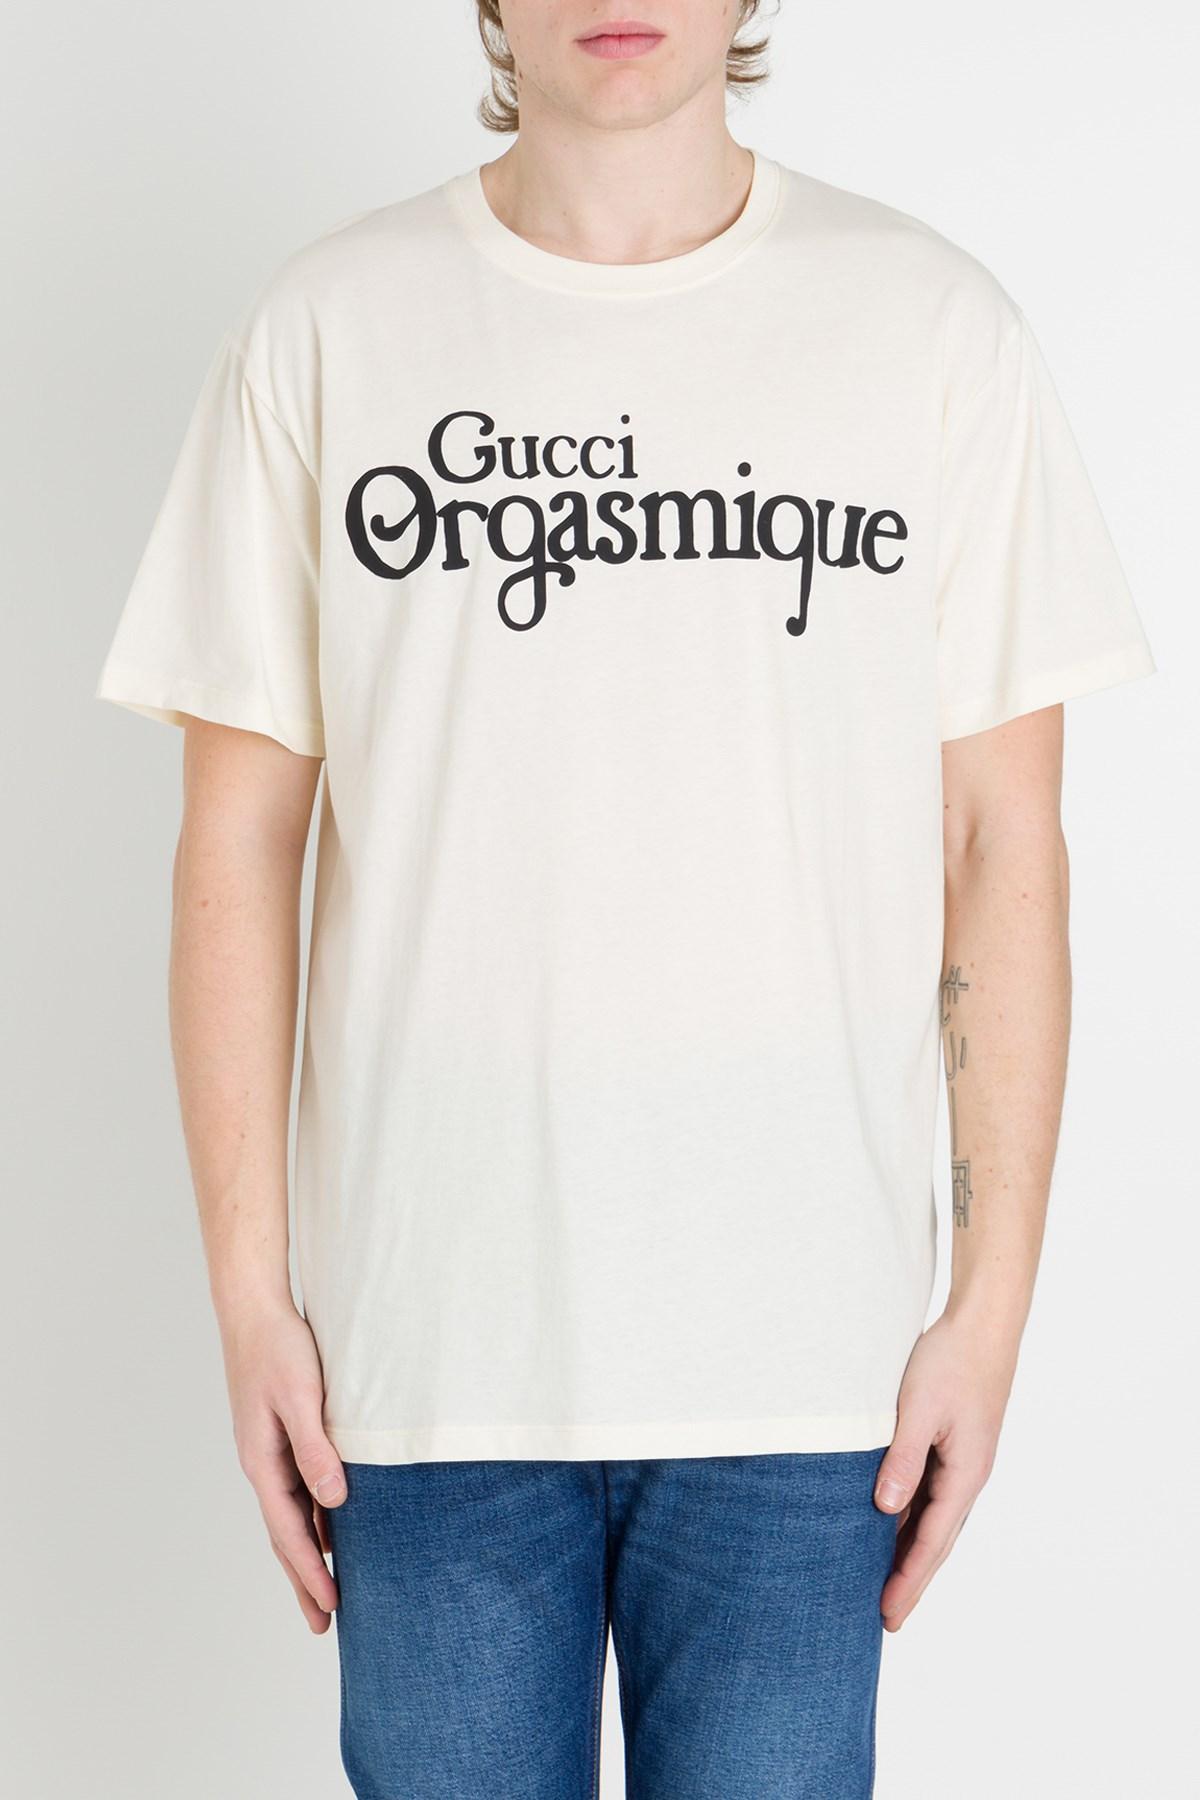 Gucci Orgasmic T-shirt for Men | Lyst